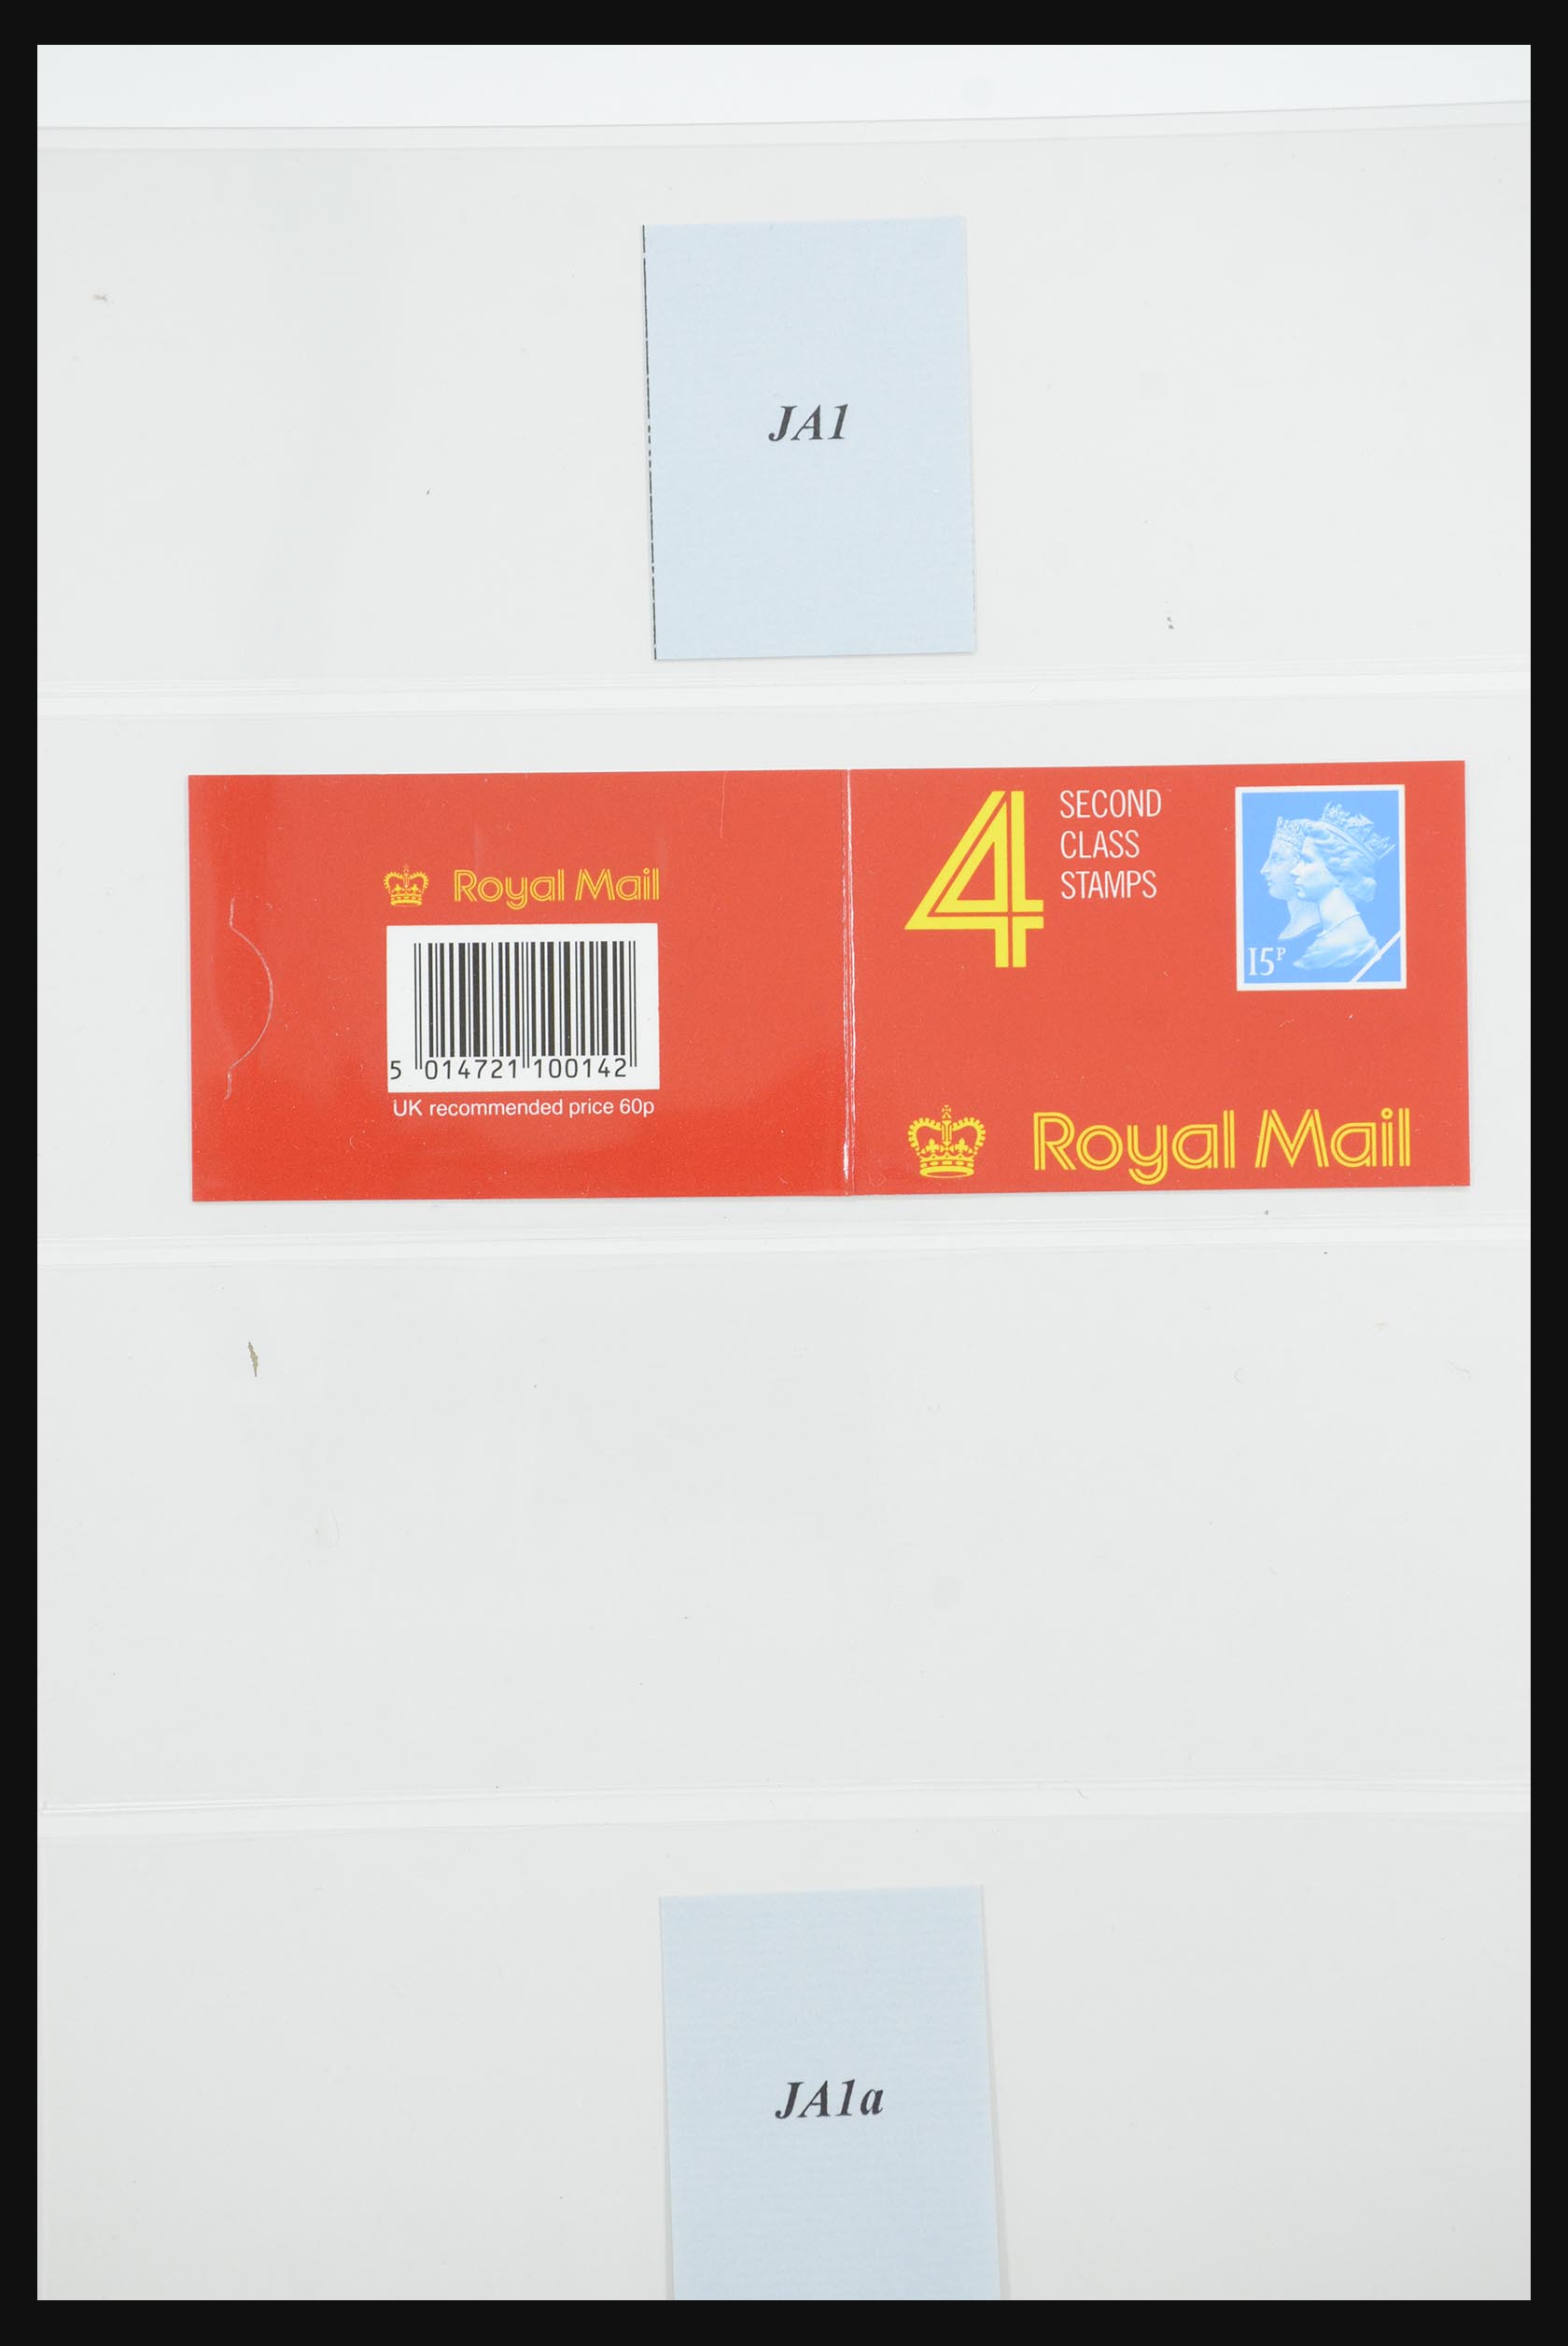 31960 179 - 31960 Great Britain stampbooklets 1989-2000.